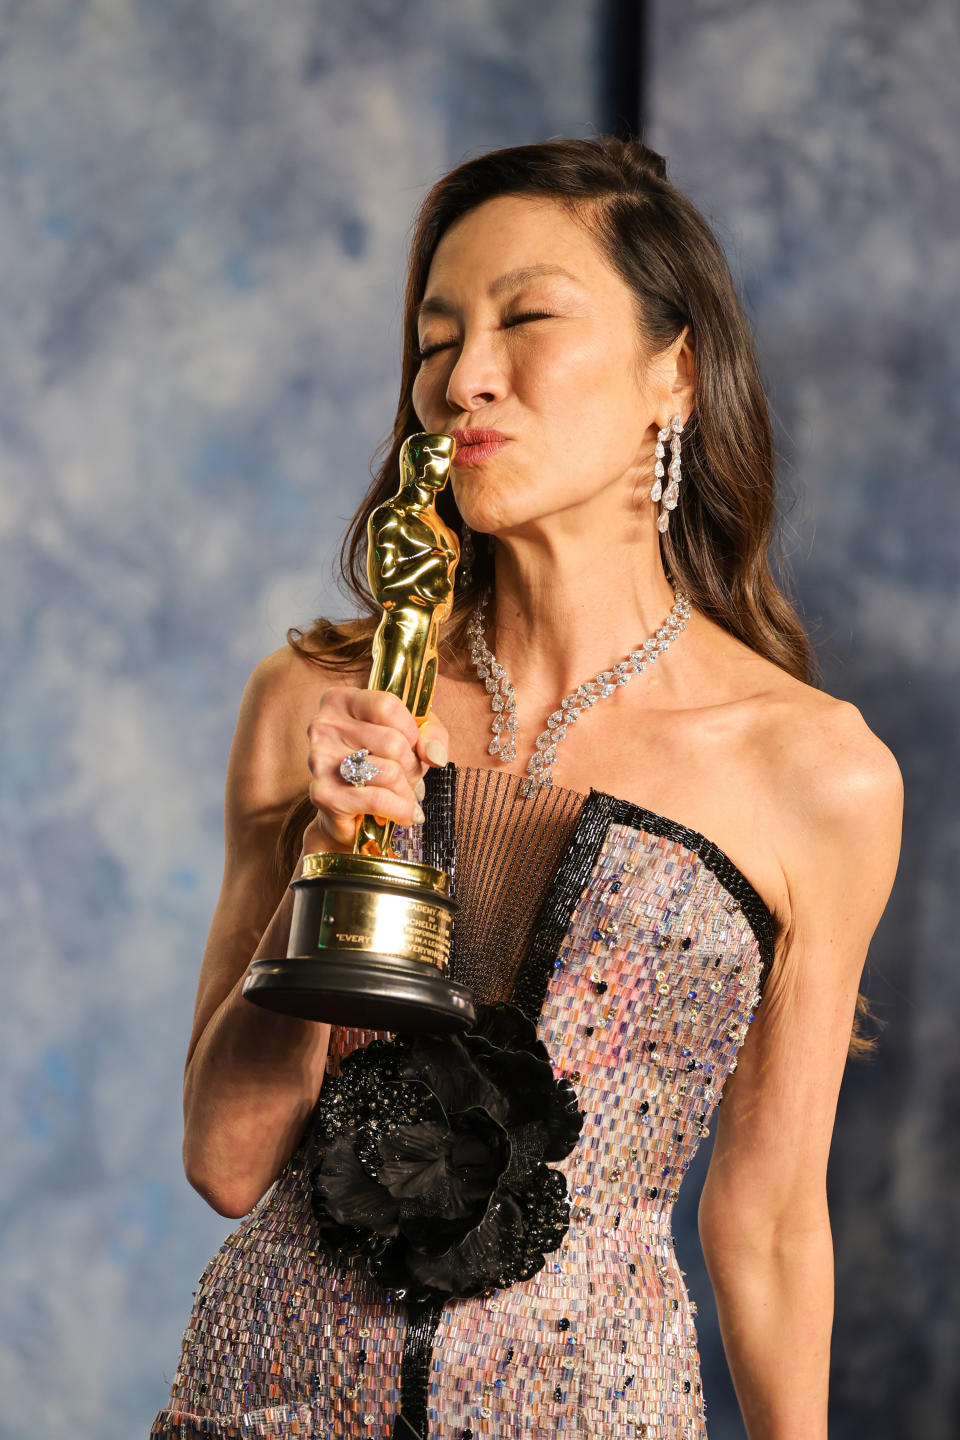 Michelle kissing her Oscar